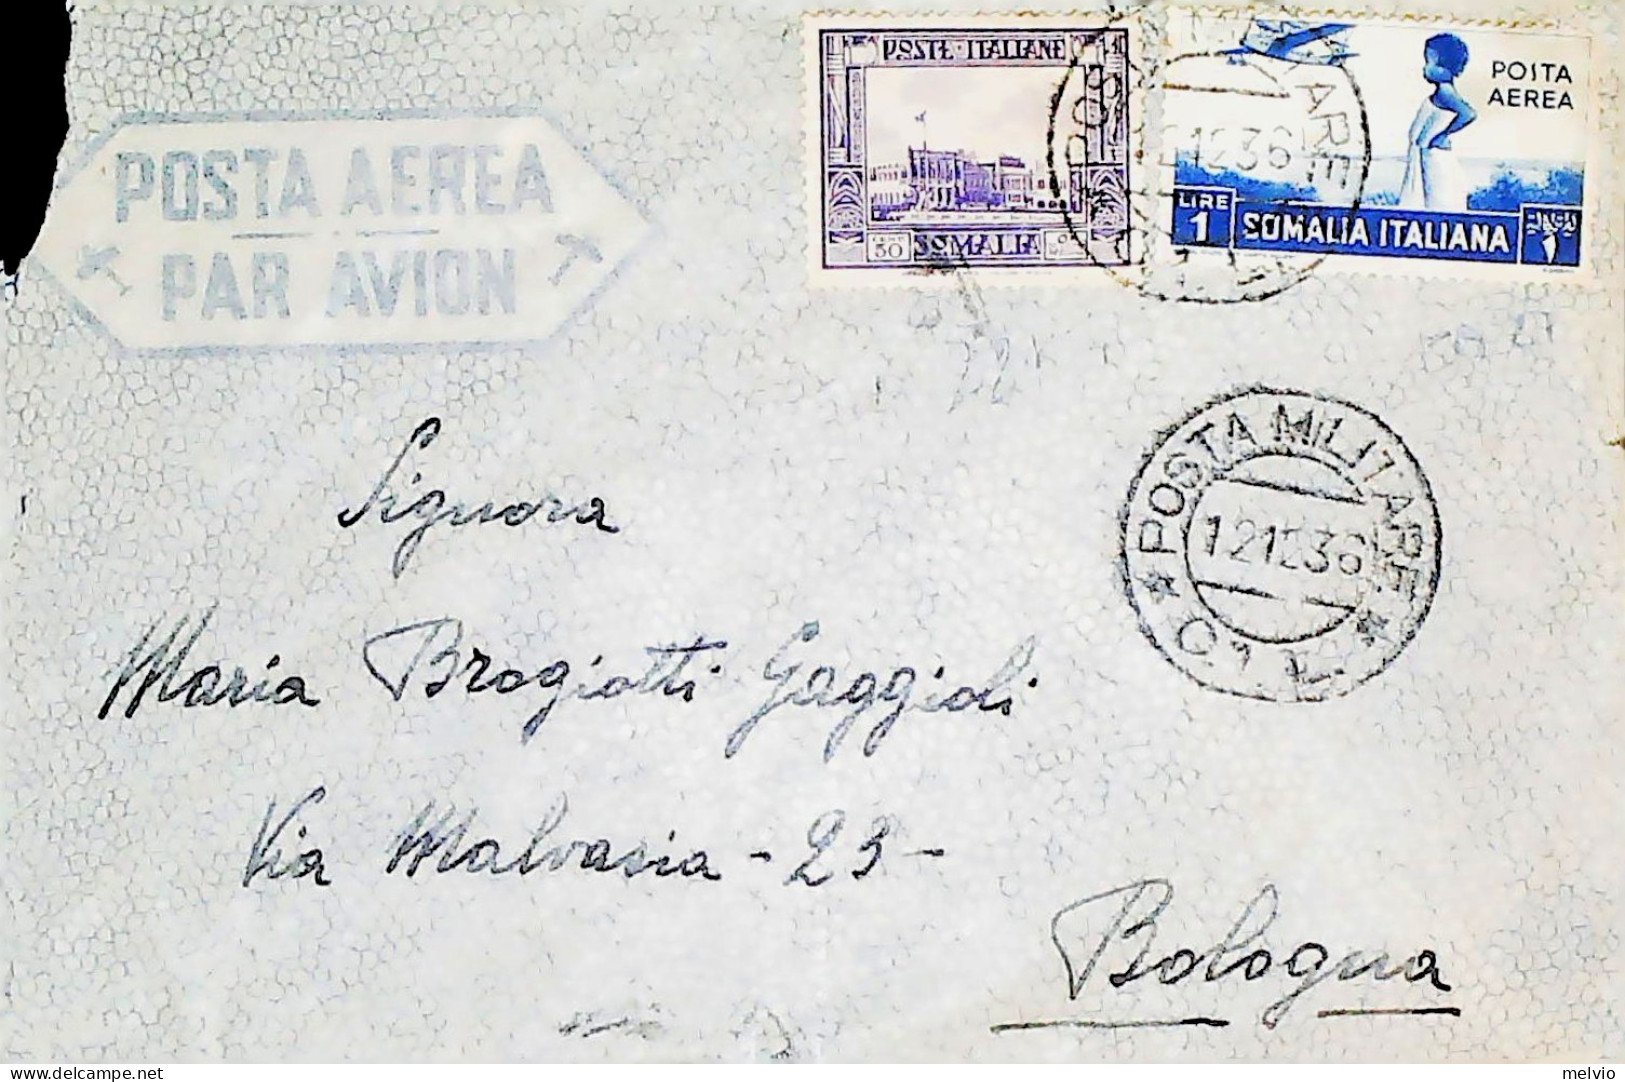 1936-Posta Militare/0.1 L (12.12.36) Su Busta Via Aerea Affrancata Somalia - Somalie